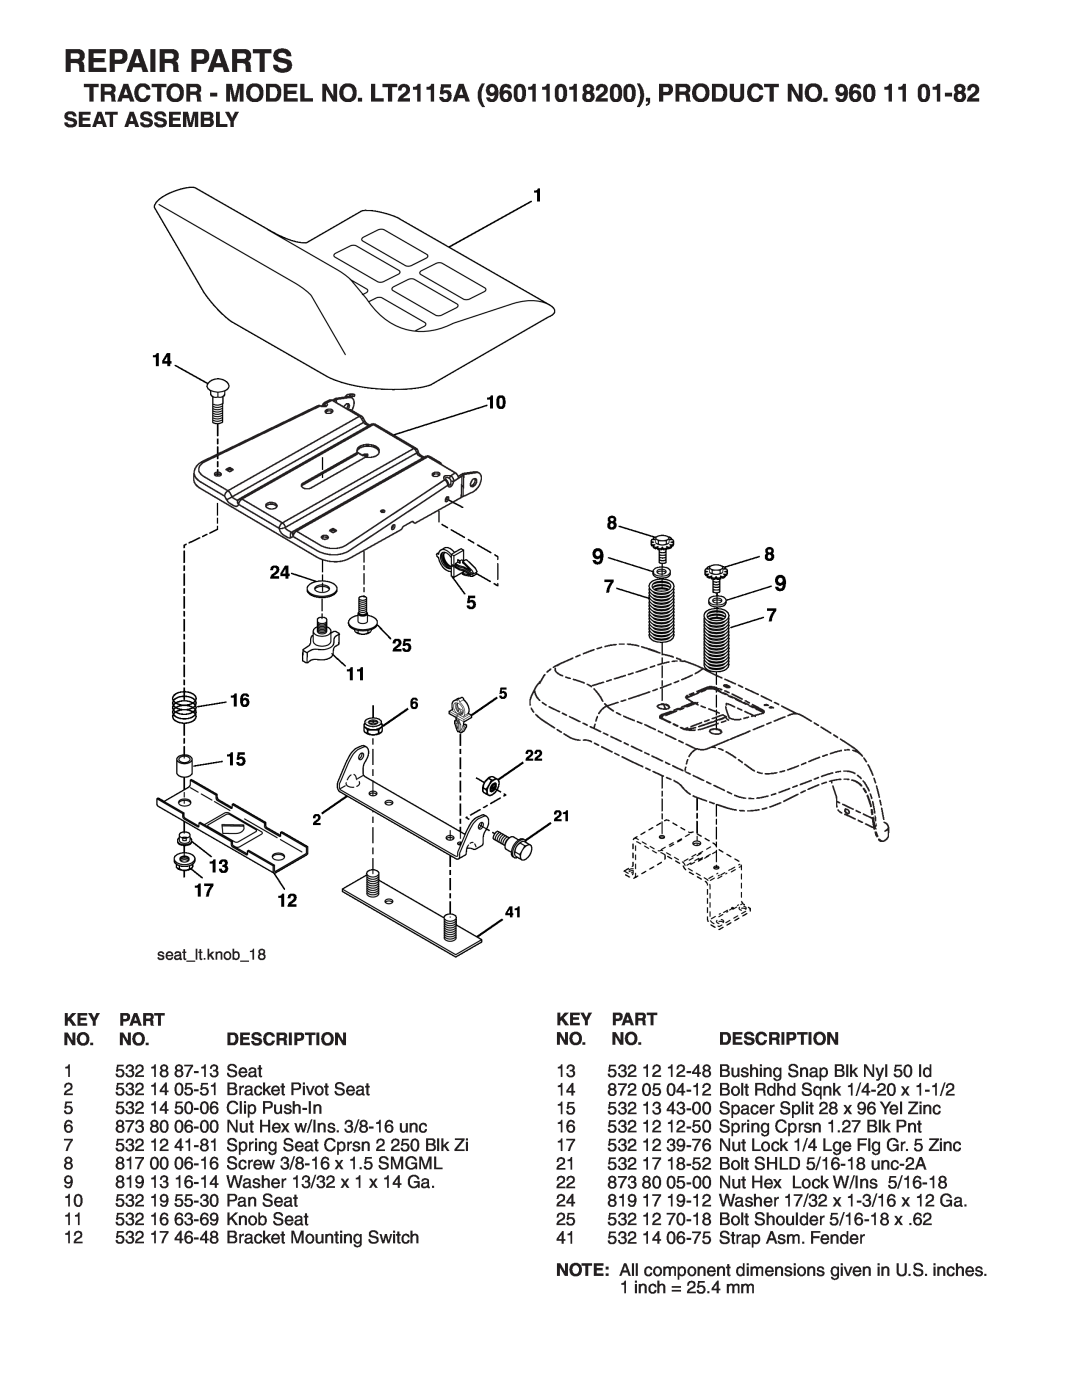 Jonsered manual Seat Assembly, Repair Parts, TRACTOR - MODEL NO. LT2115A 96011018200, PRODUCT NO. 960, Description 